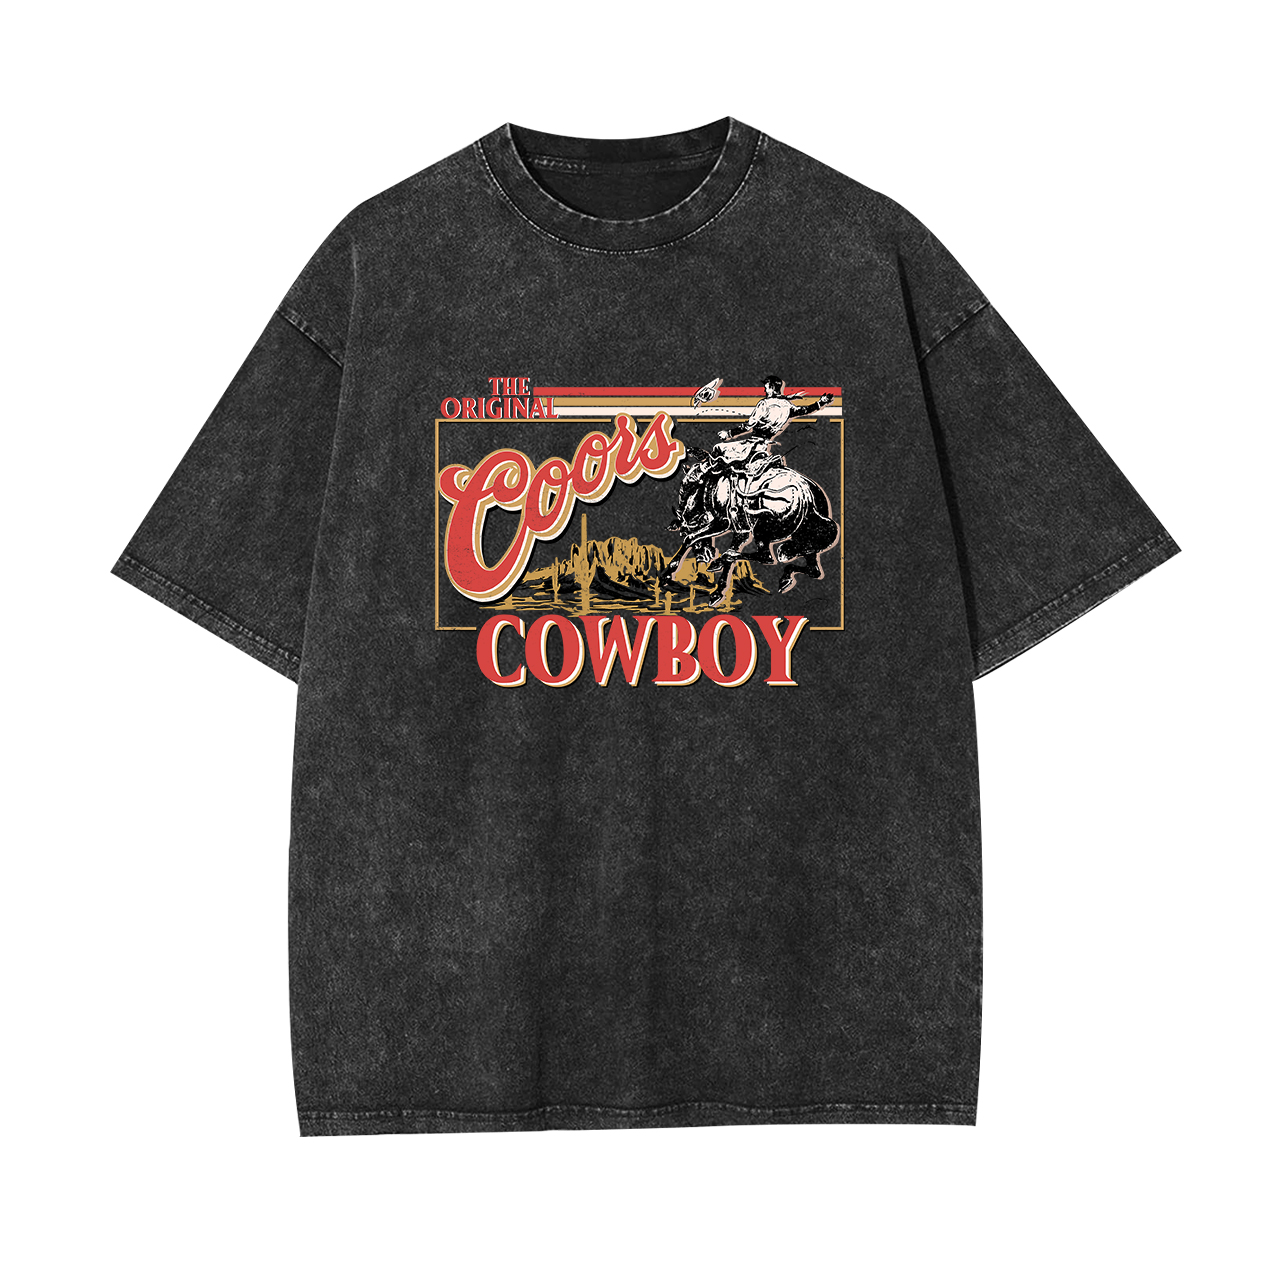 The Original Coors Cowboy Garment-dye Tees